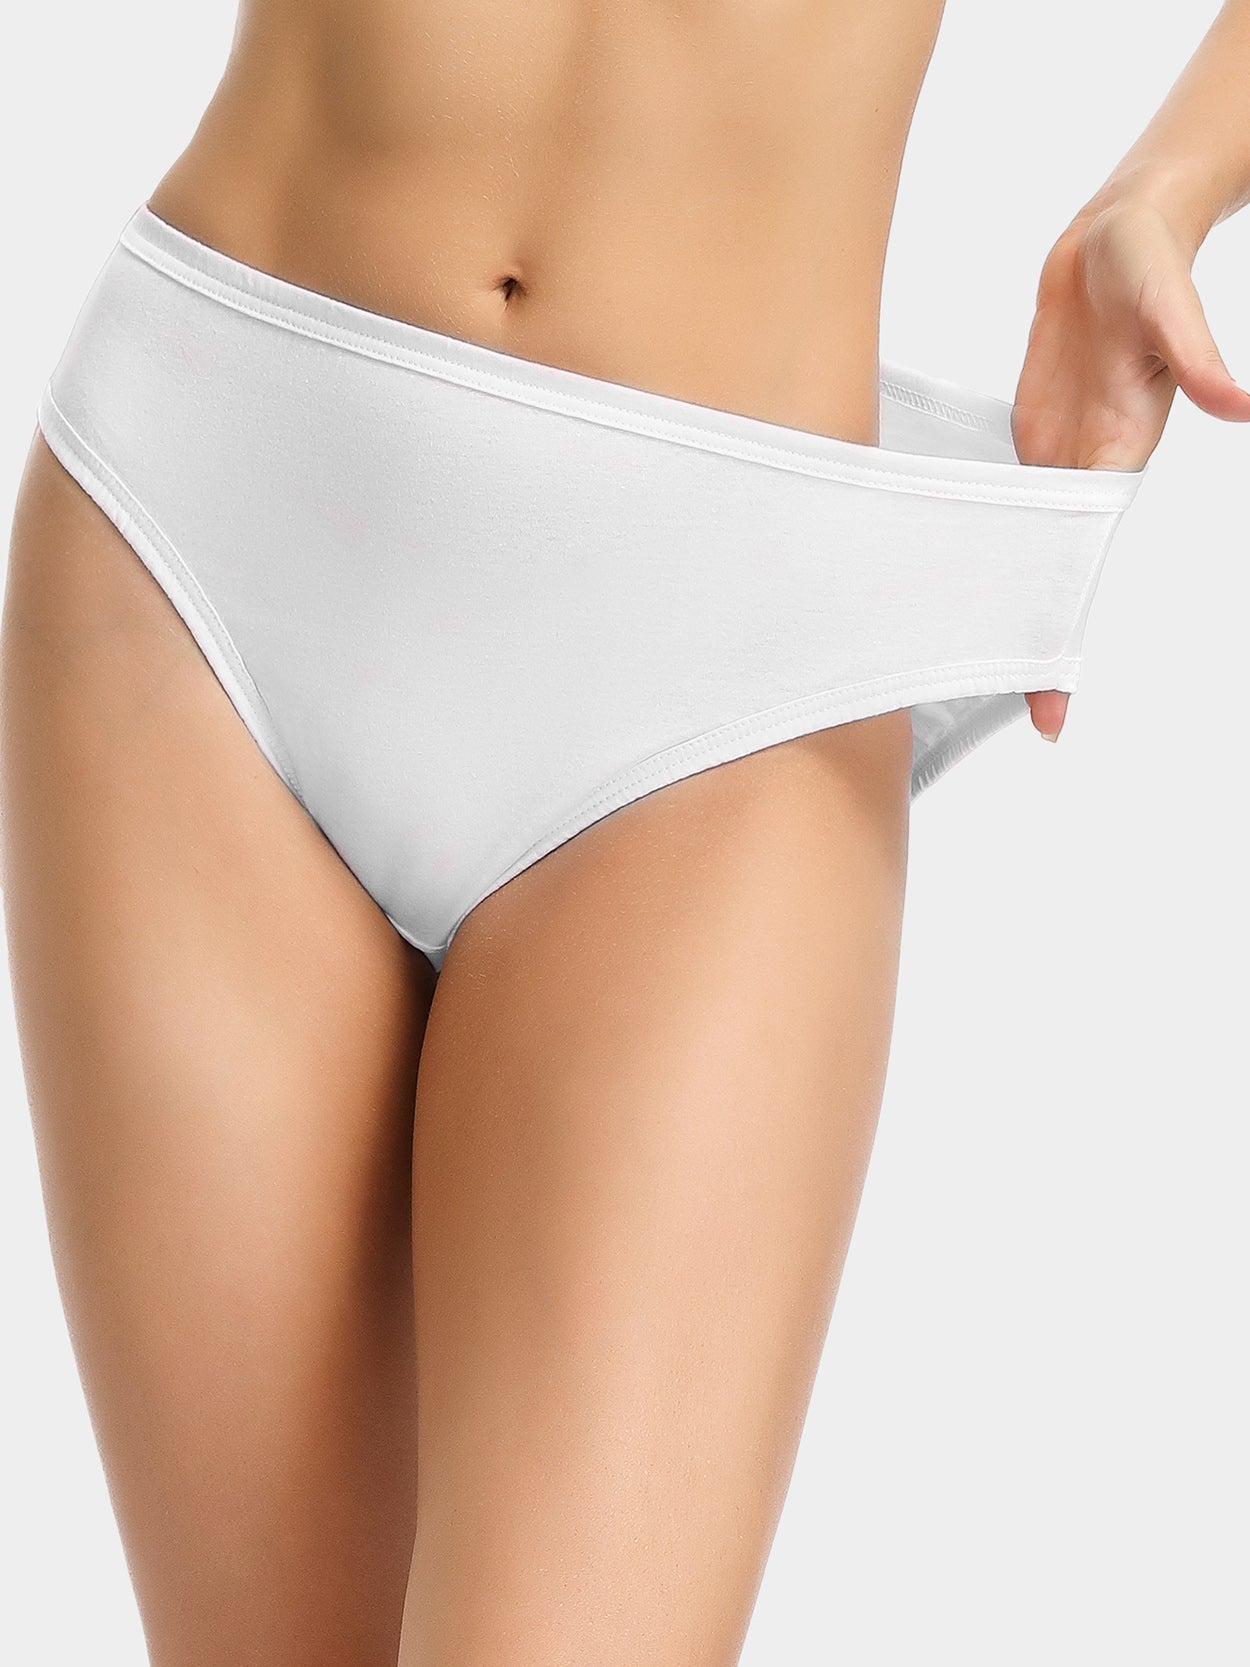 Women's White Cotton High Cut Panties